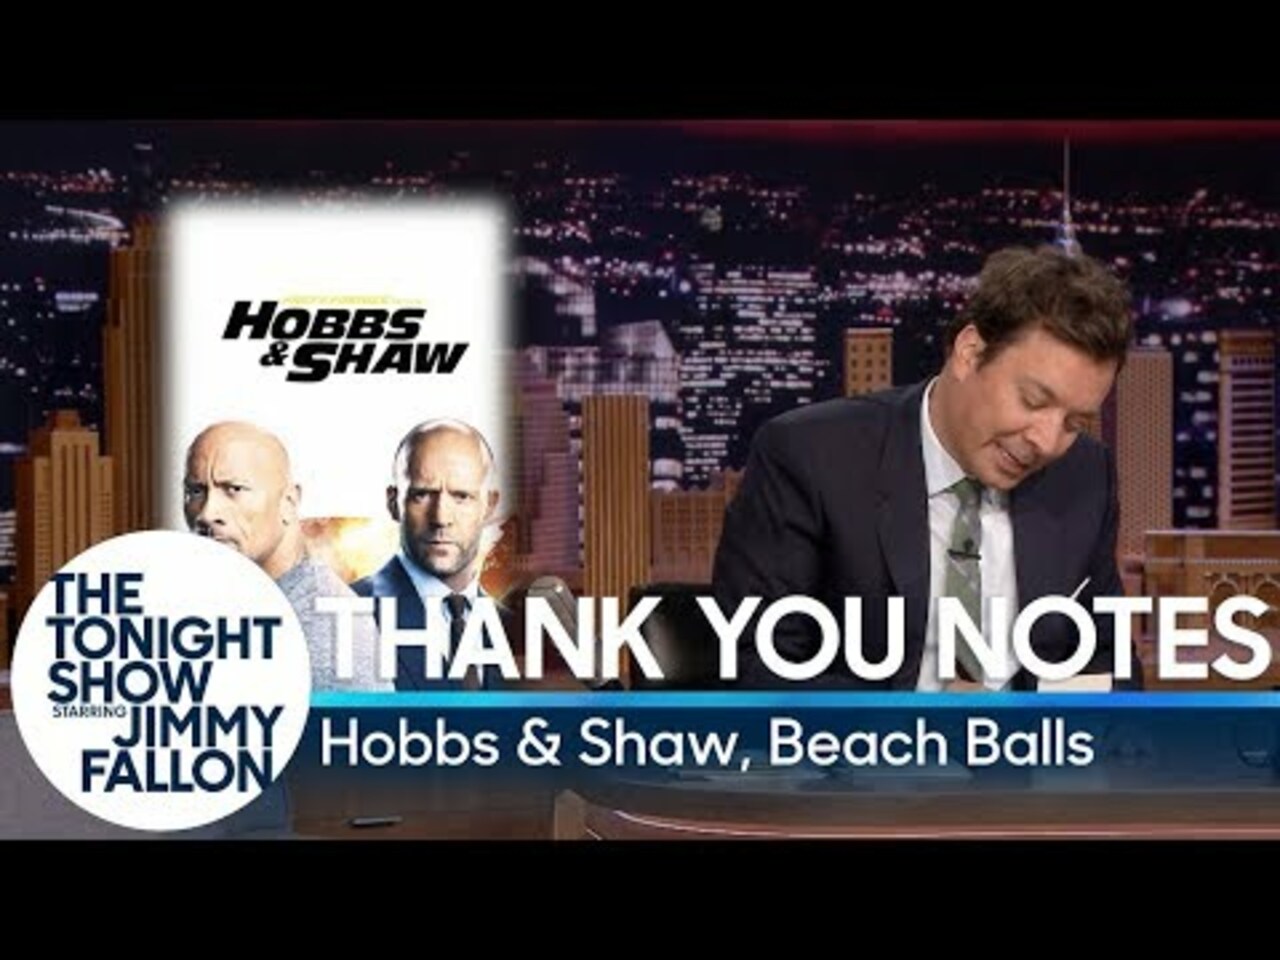 Thank You Notes: Hobbs & Shaw, Beach Balls